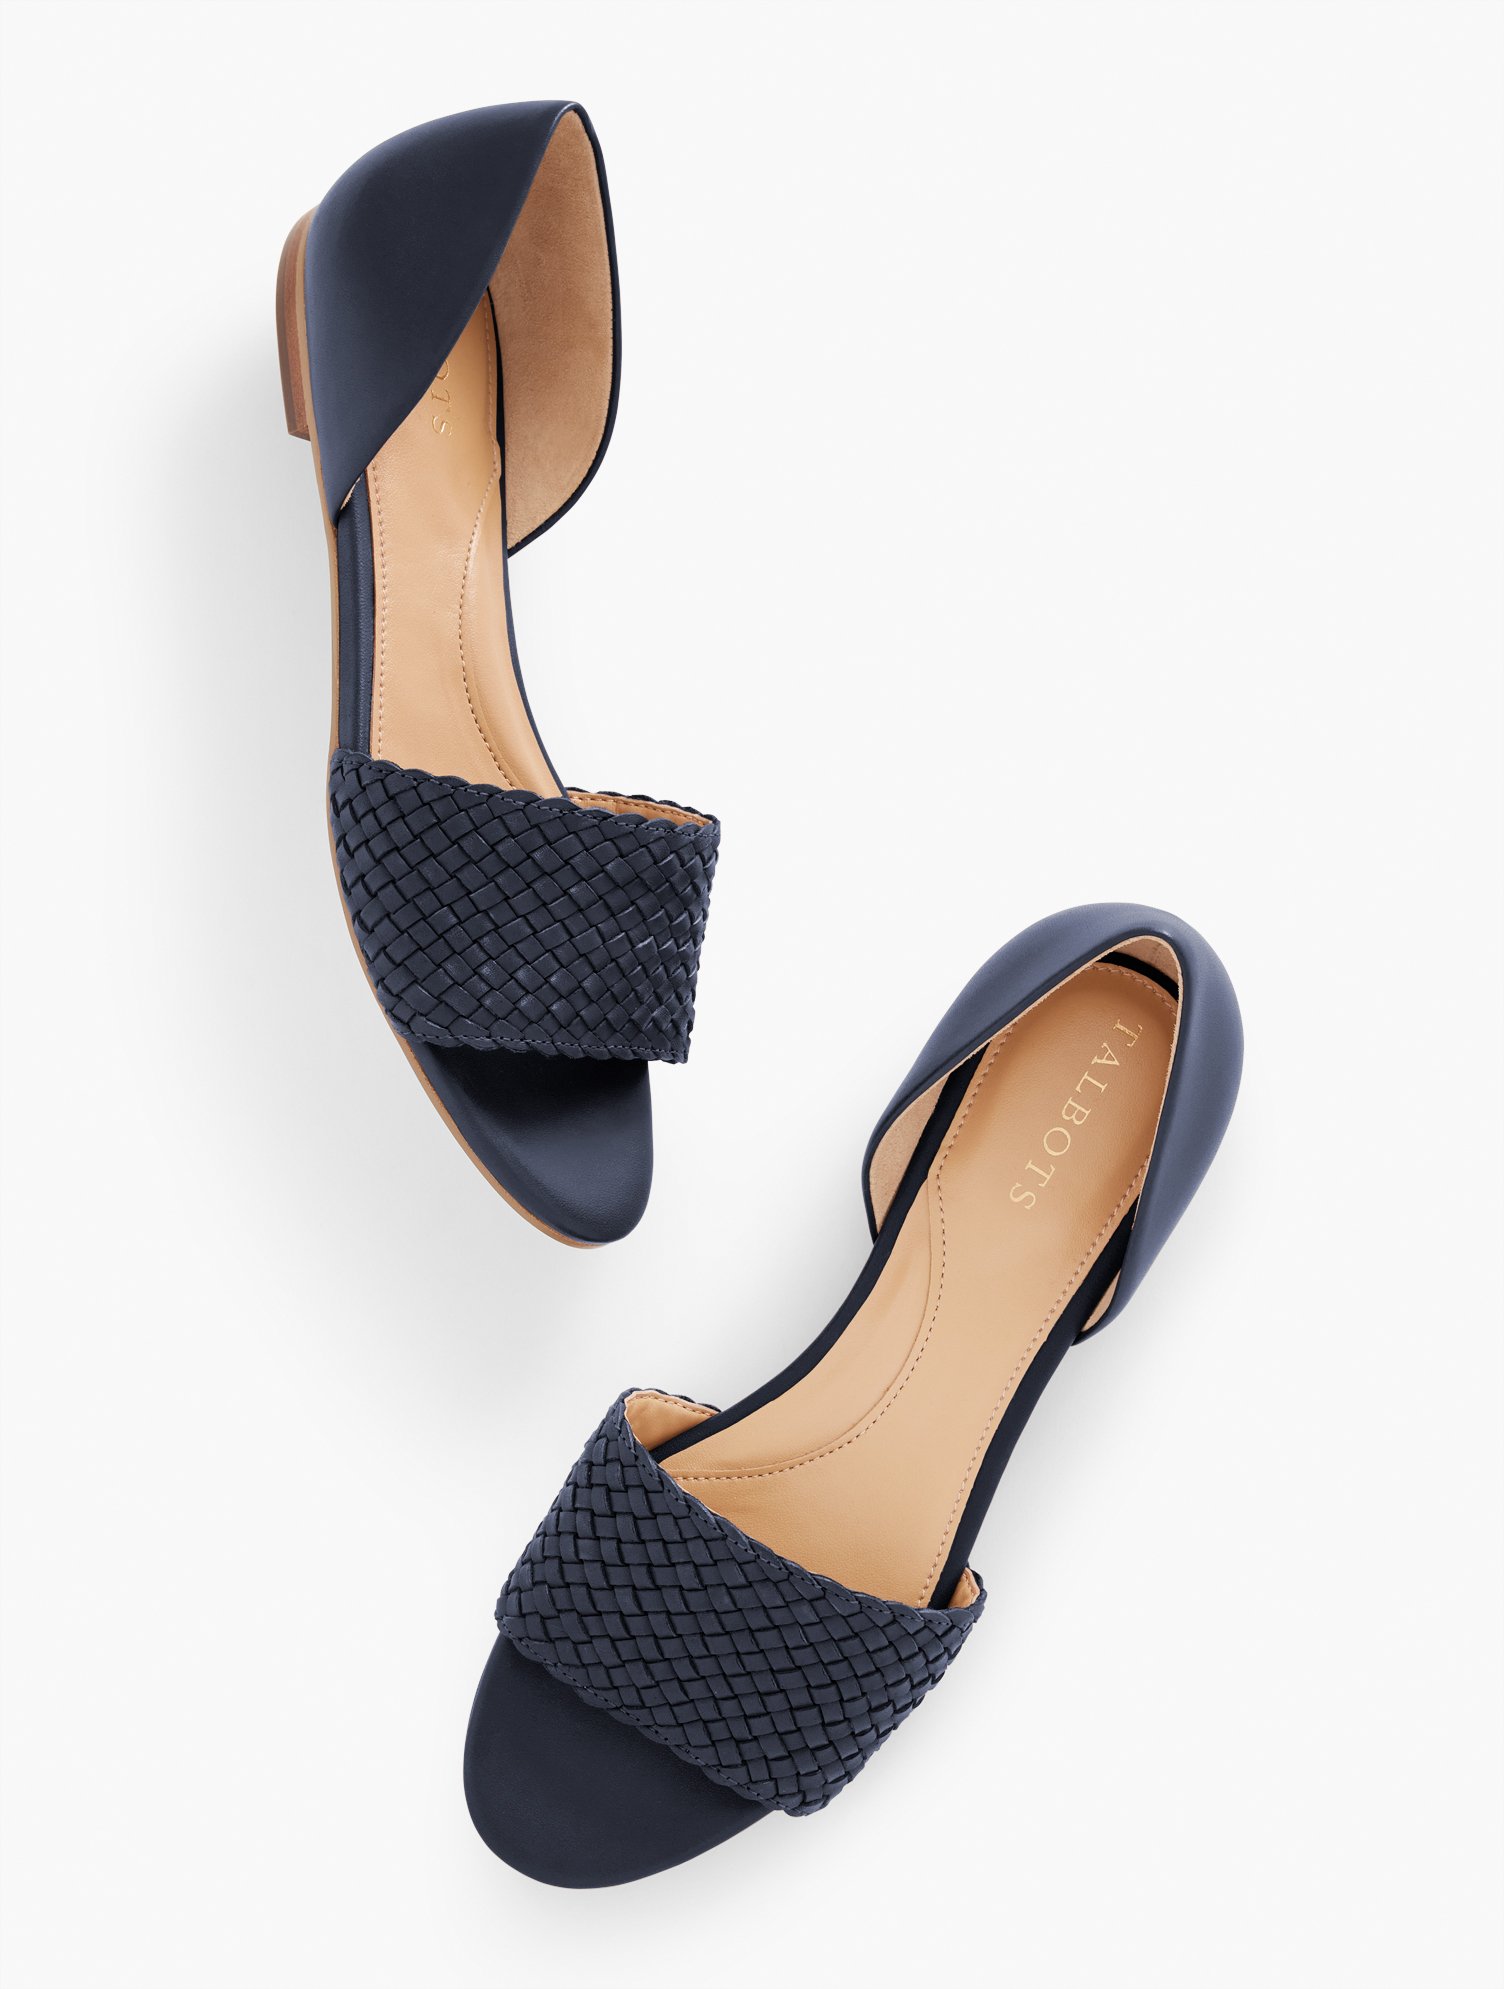 Talbots Leona Woven Leather Sandals - Blue - 10m